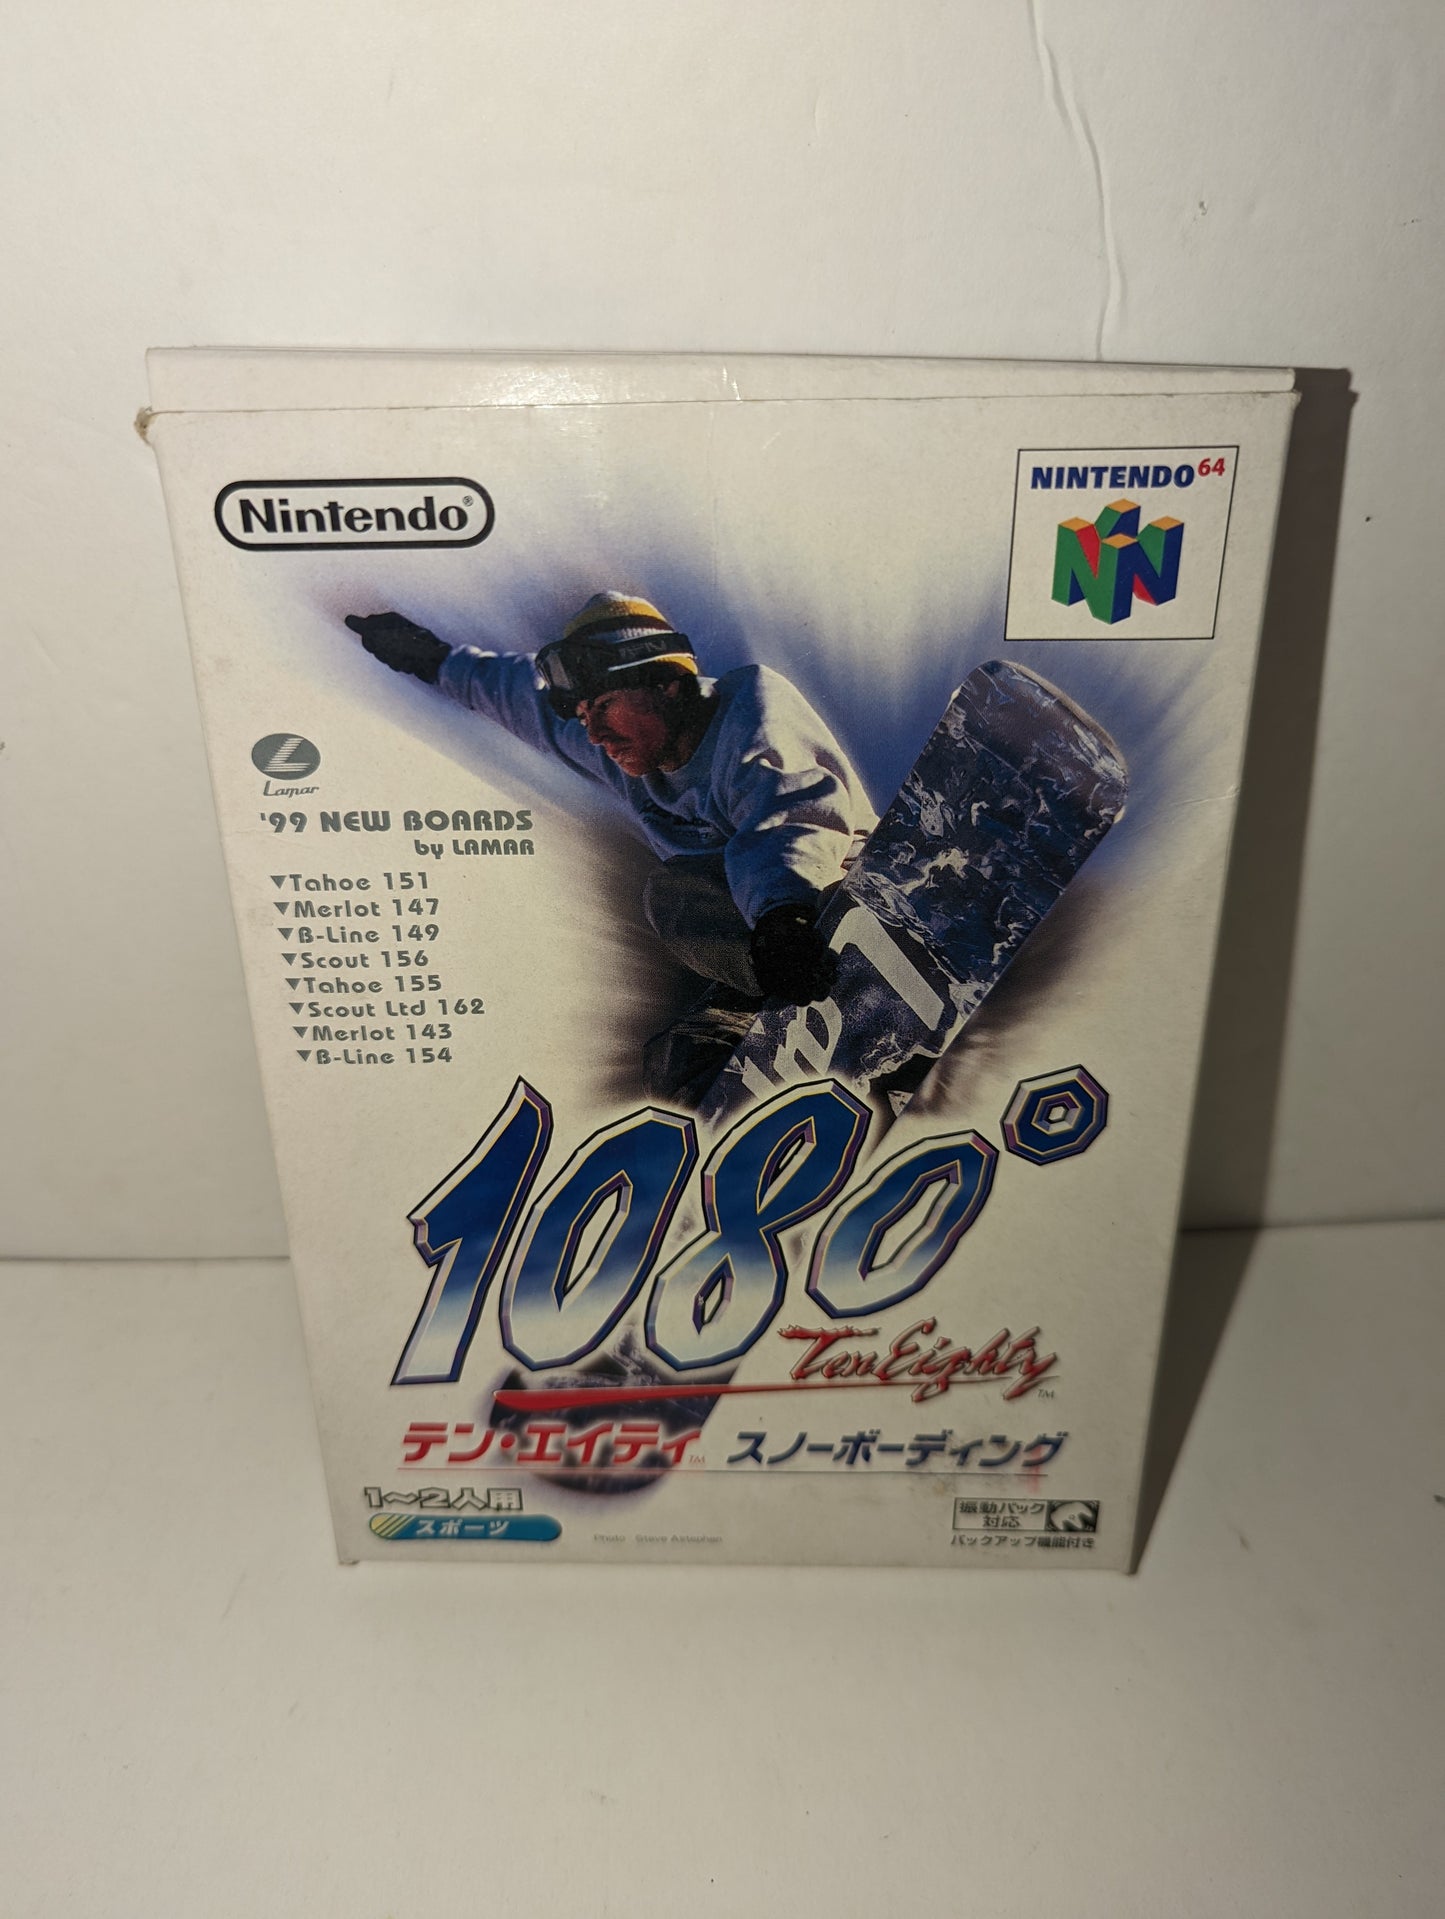 Nintendo 64 - 1080 Snowboarding JP